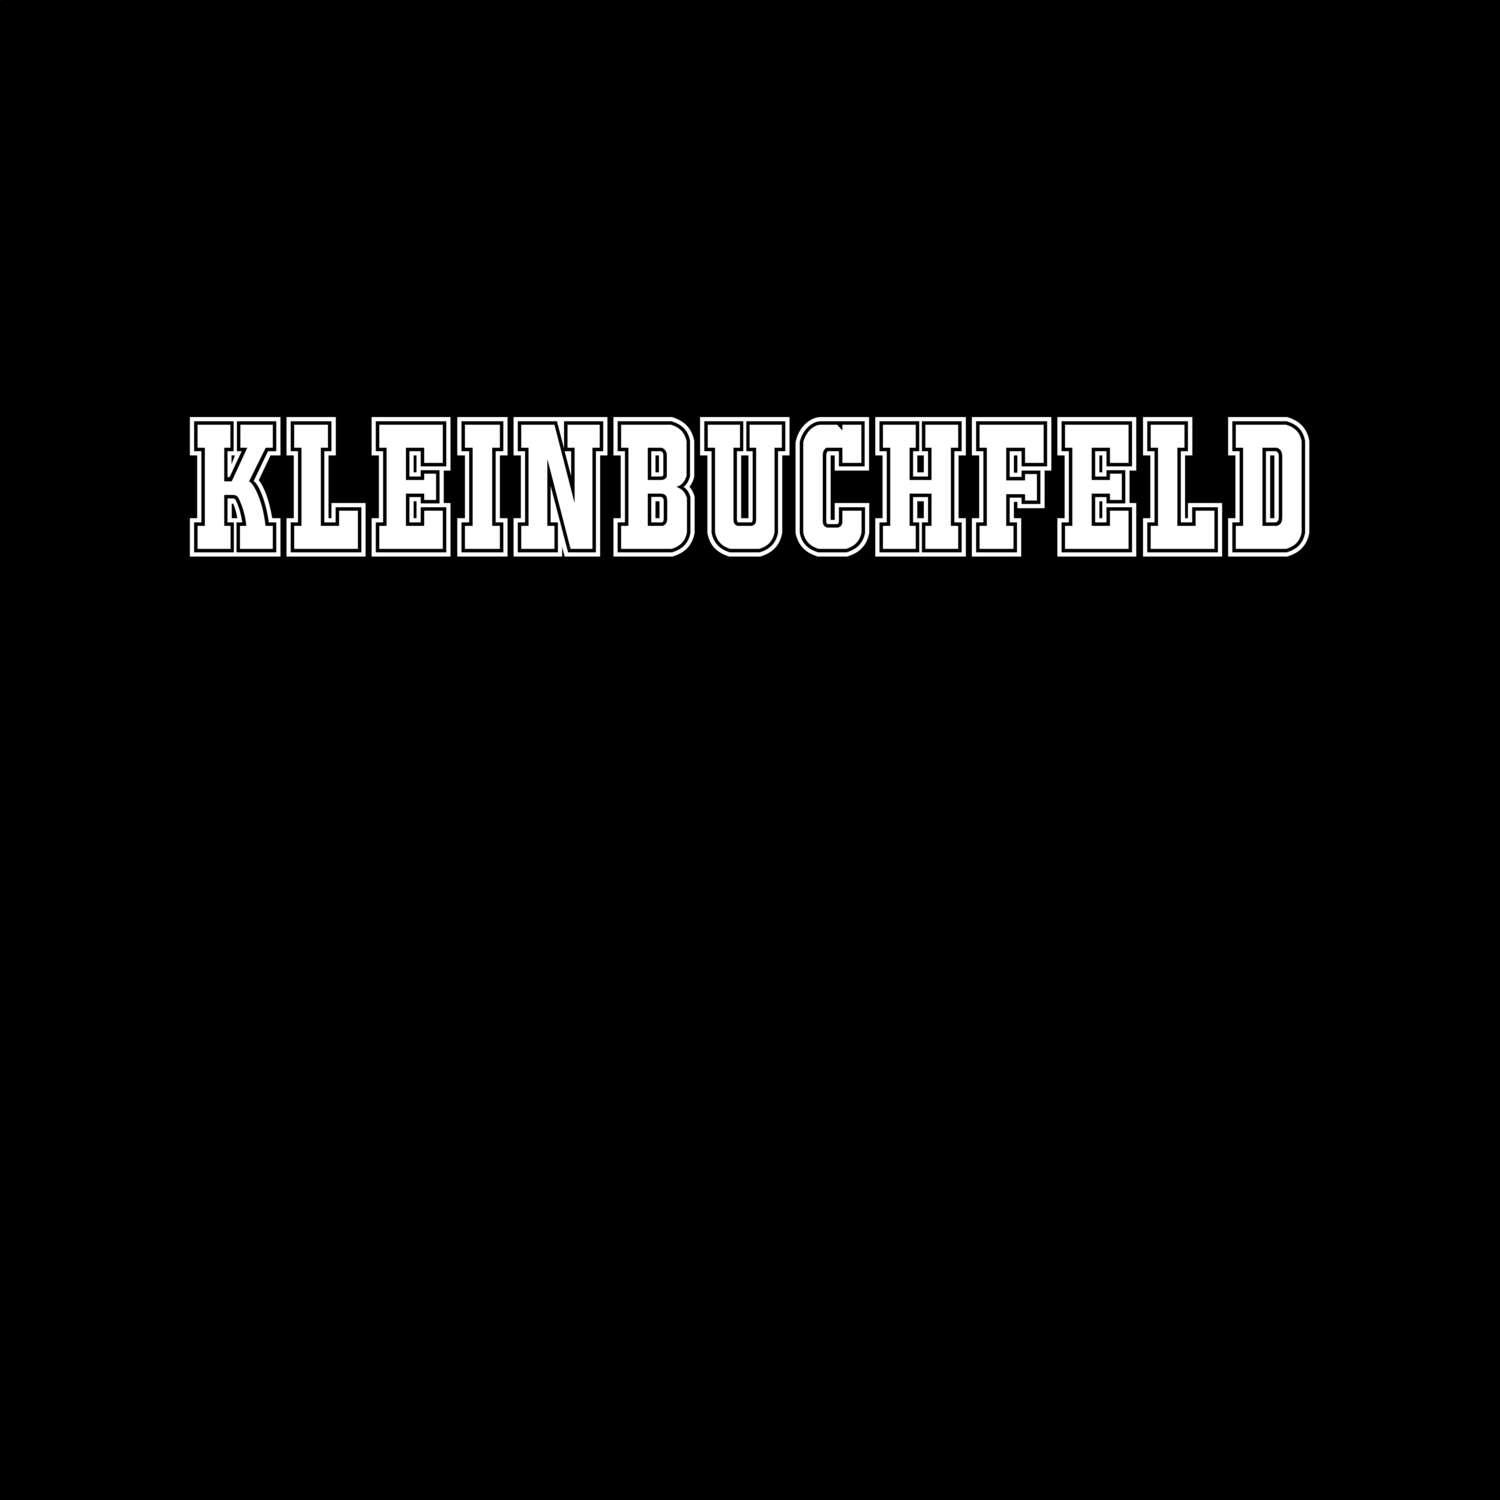 Kleinbuchfeld T-Shirt »Classic«